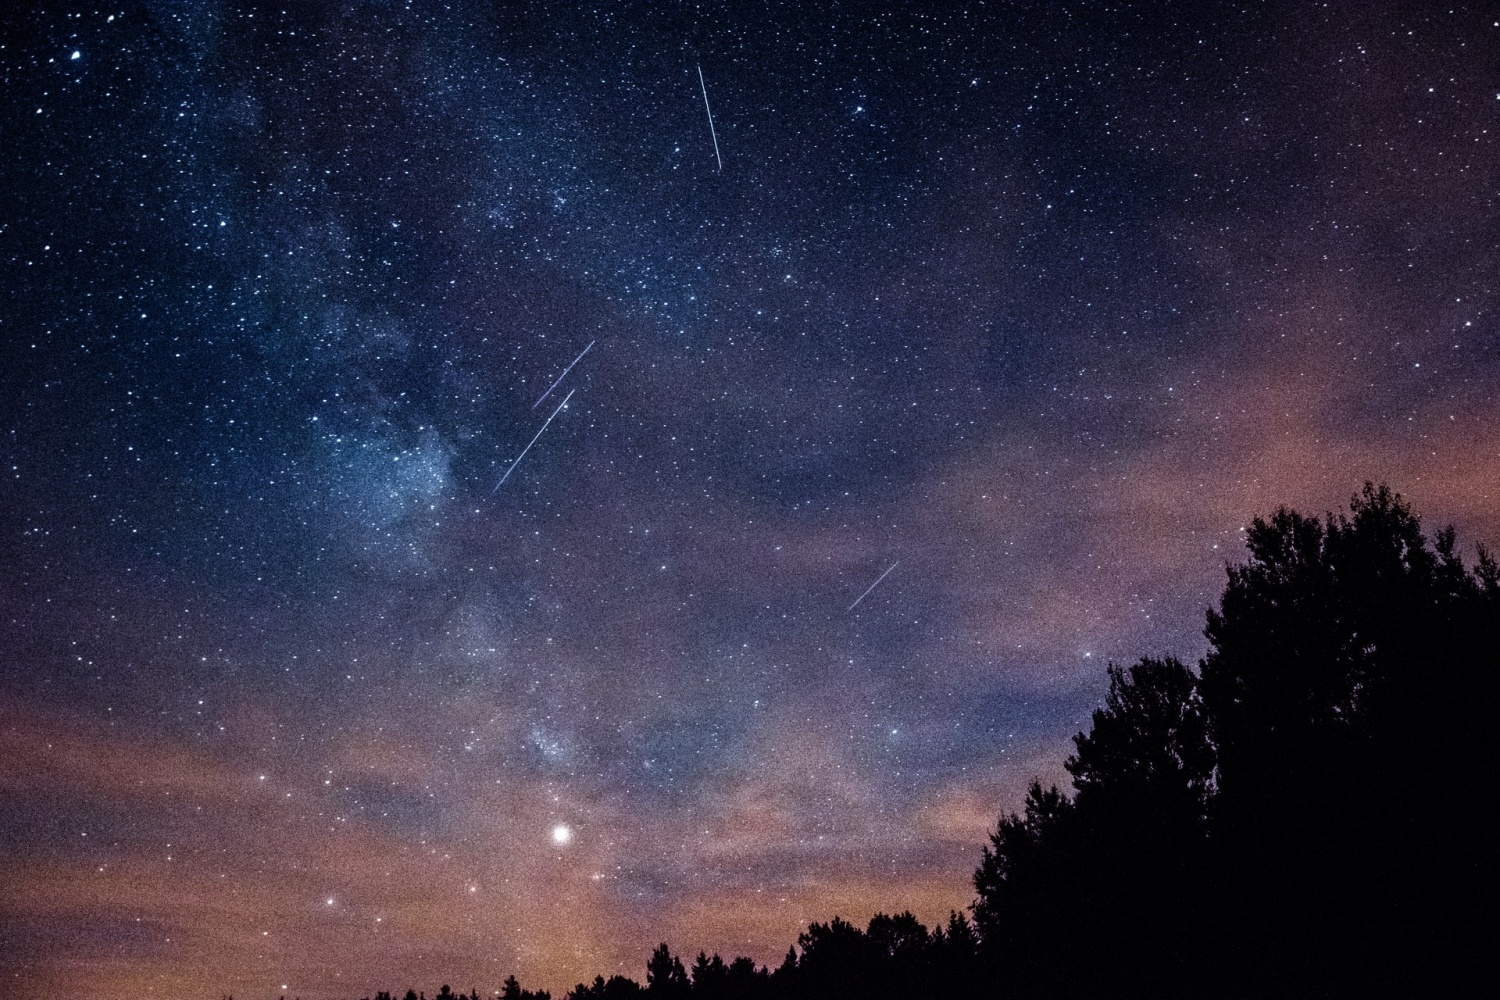 Eta Aquarid Meteor Shower Guide 2022 Where to Watch, Peak Times, How